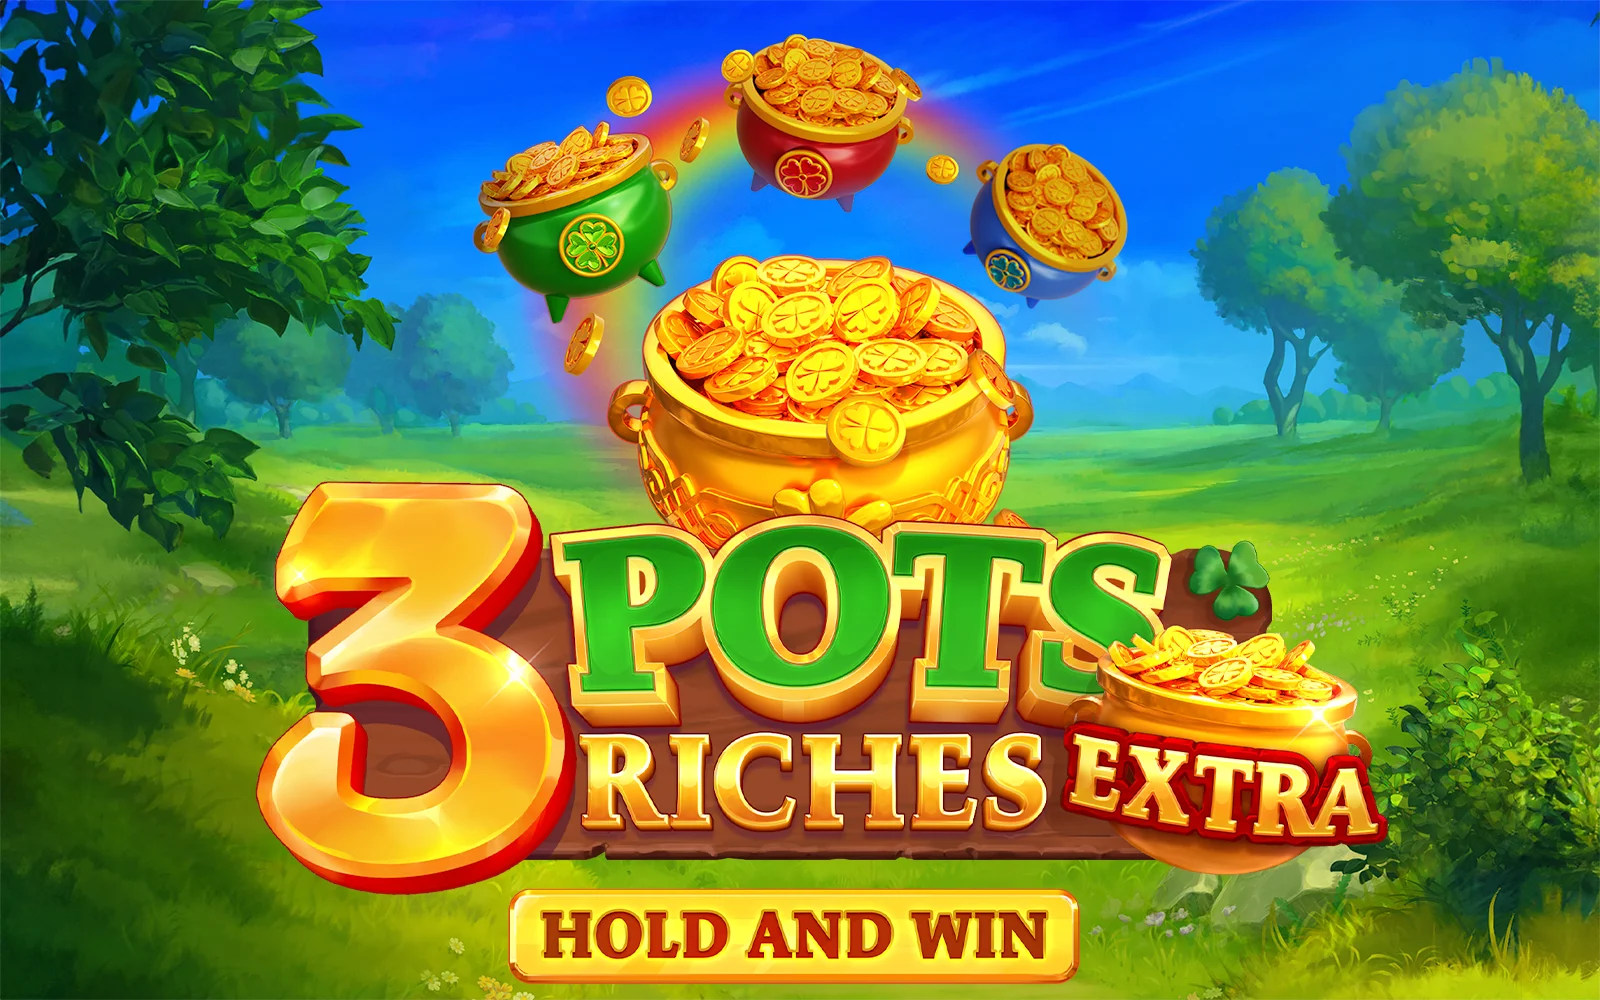 Starcasino.be online casino üzerinden 3 Pots Riches Extra: Hold and Win oynayın